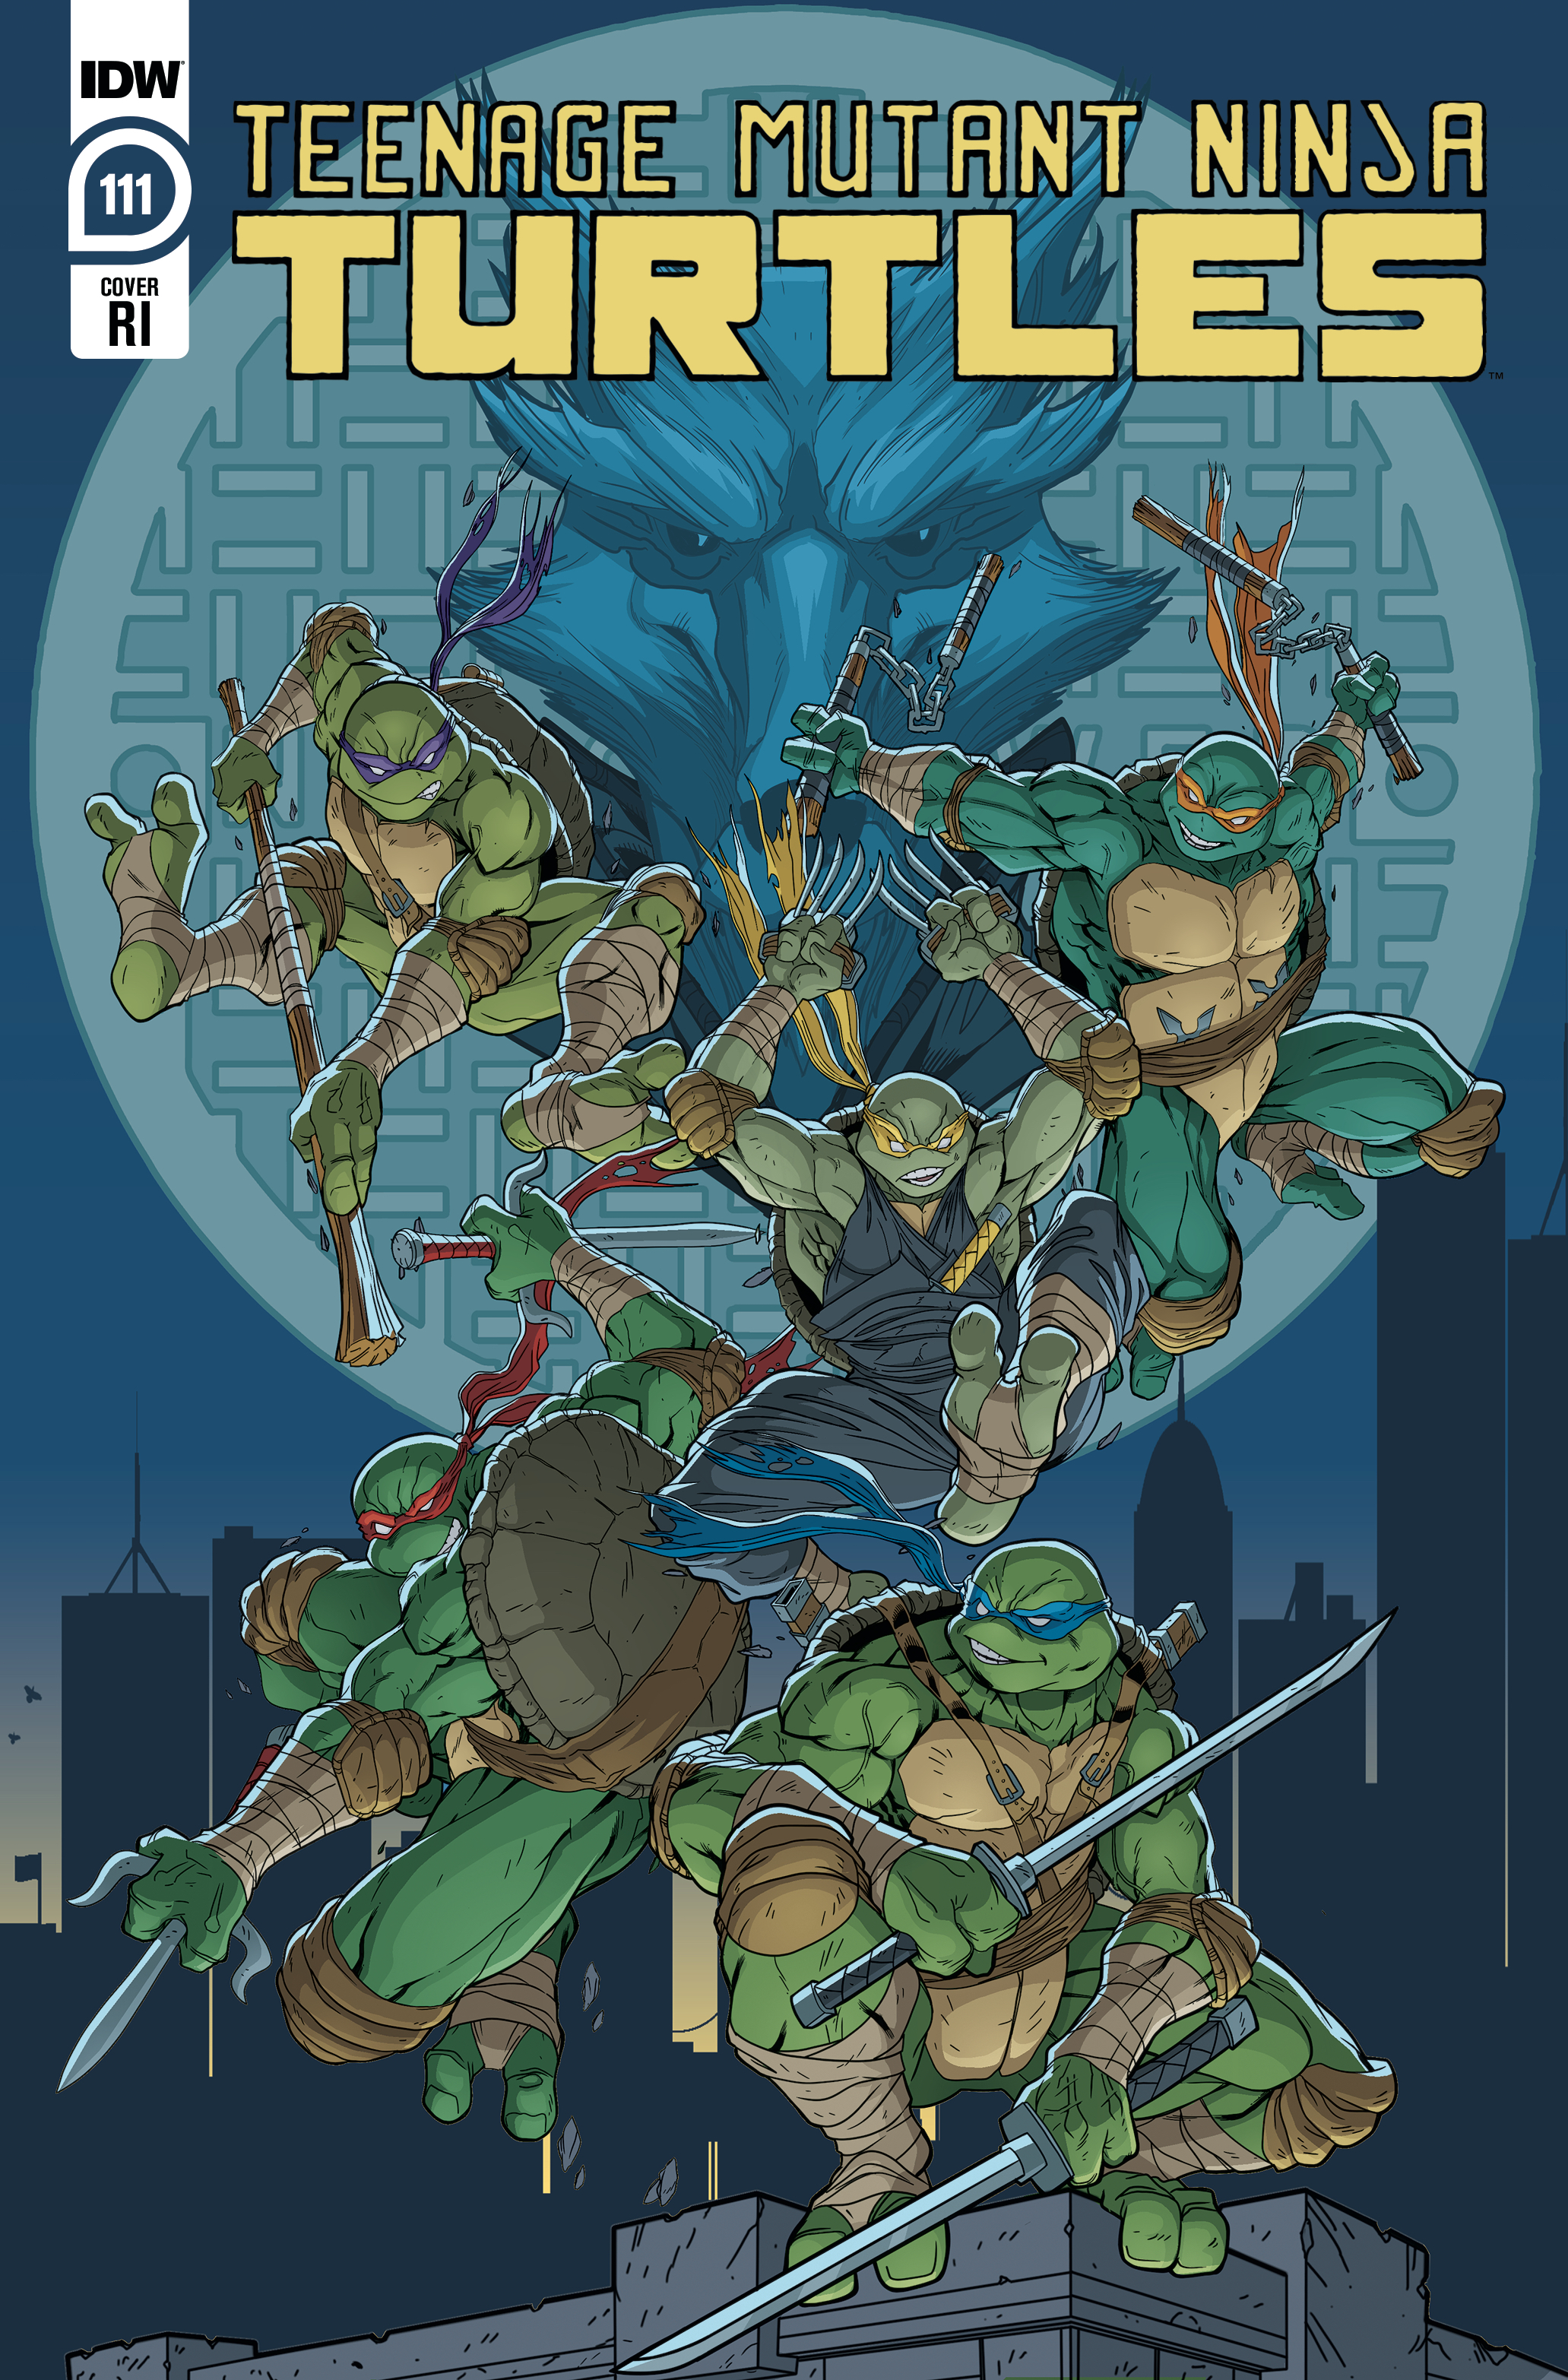 Teenage Mutant Ninja Turtles Ongoing #111 1 for 10 Incentive Lubera (2011)